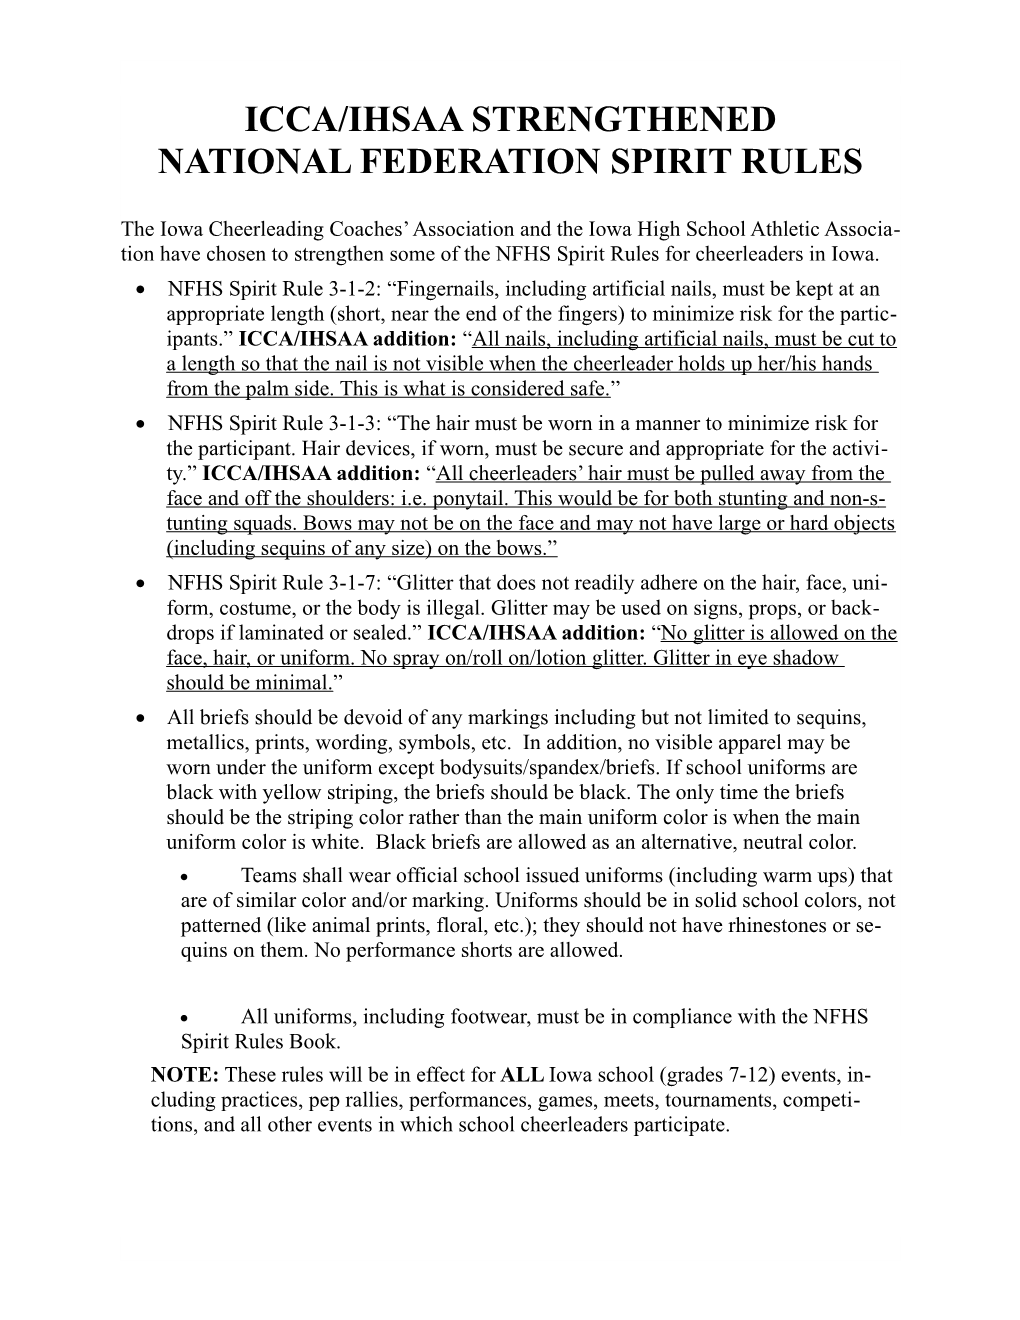 NATIONAL FEDERATION Spirit Rules